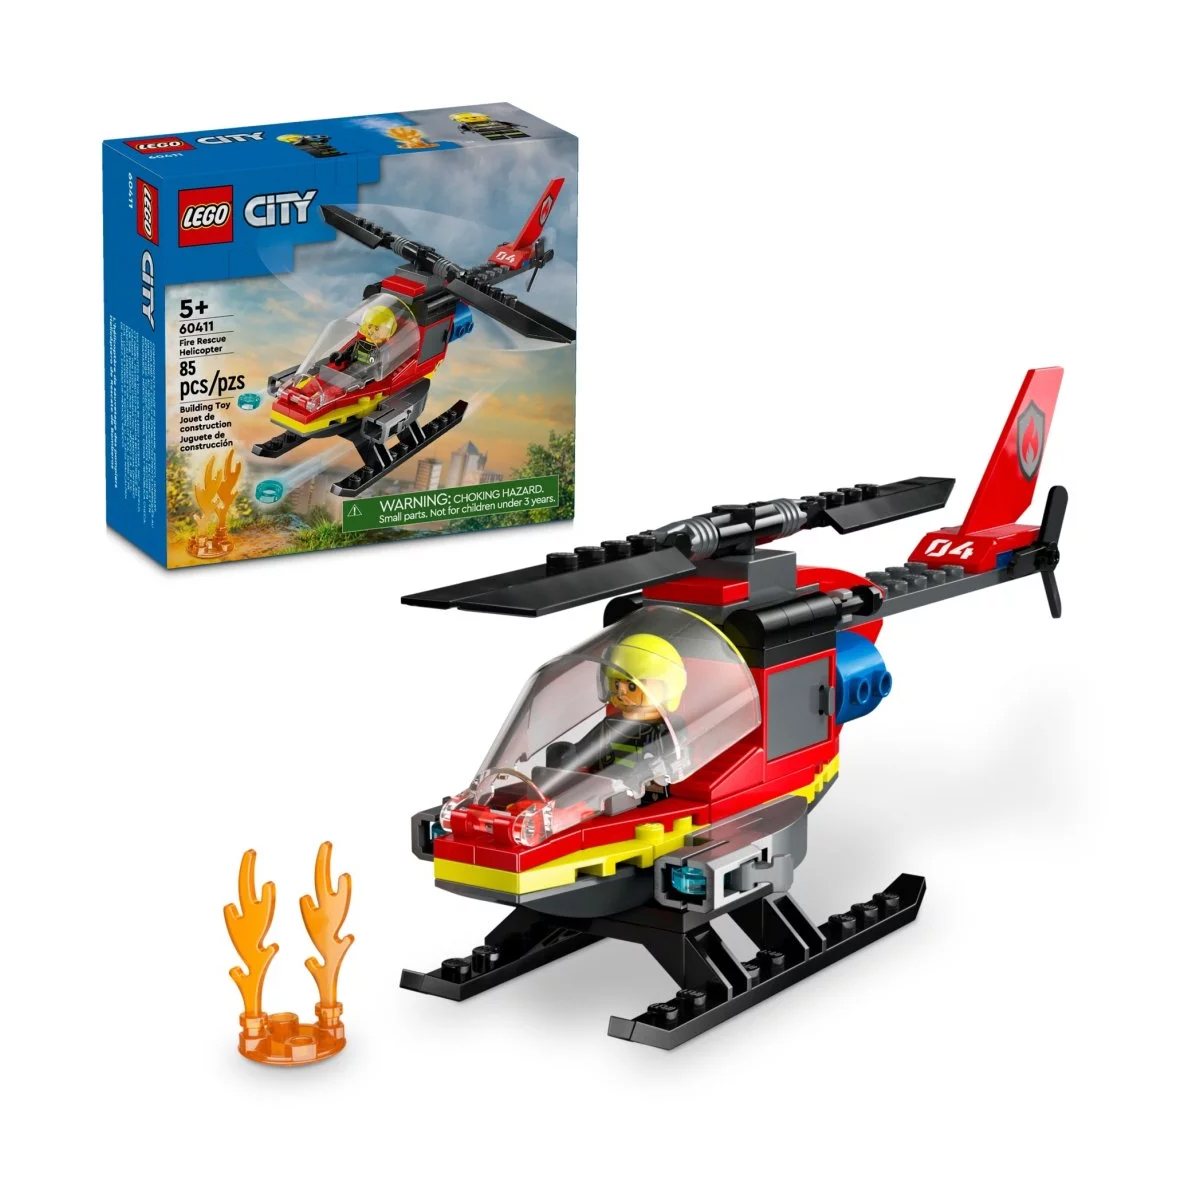 Конструктор Lego City Fire Rescue Helicopter 60411, 85 деталей lego city 30368 fire rescue water scooter 32 дет